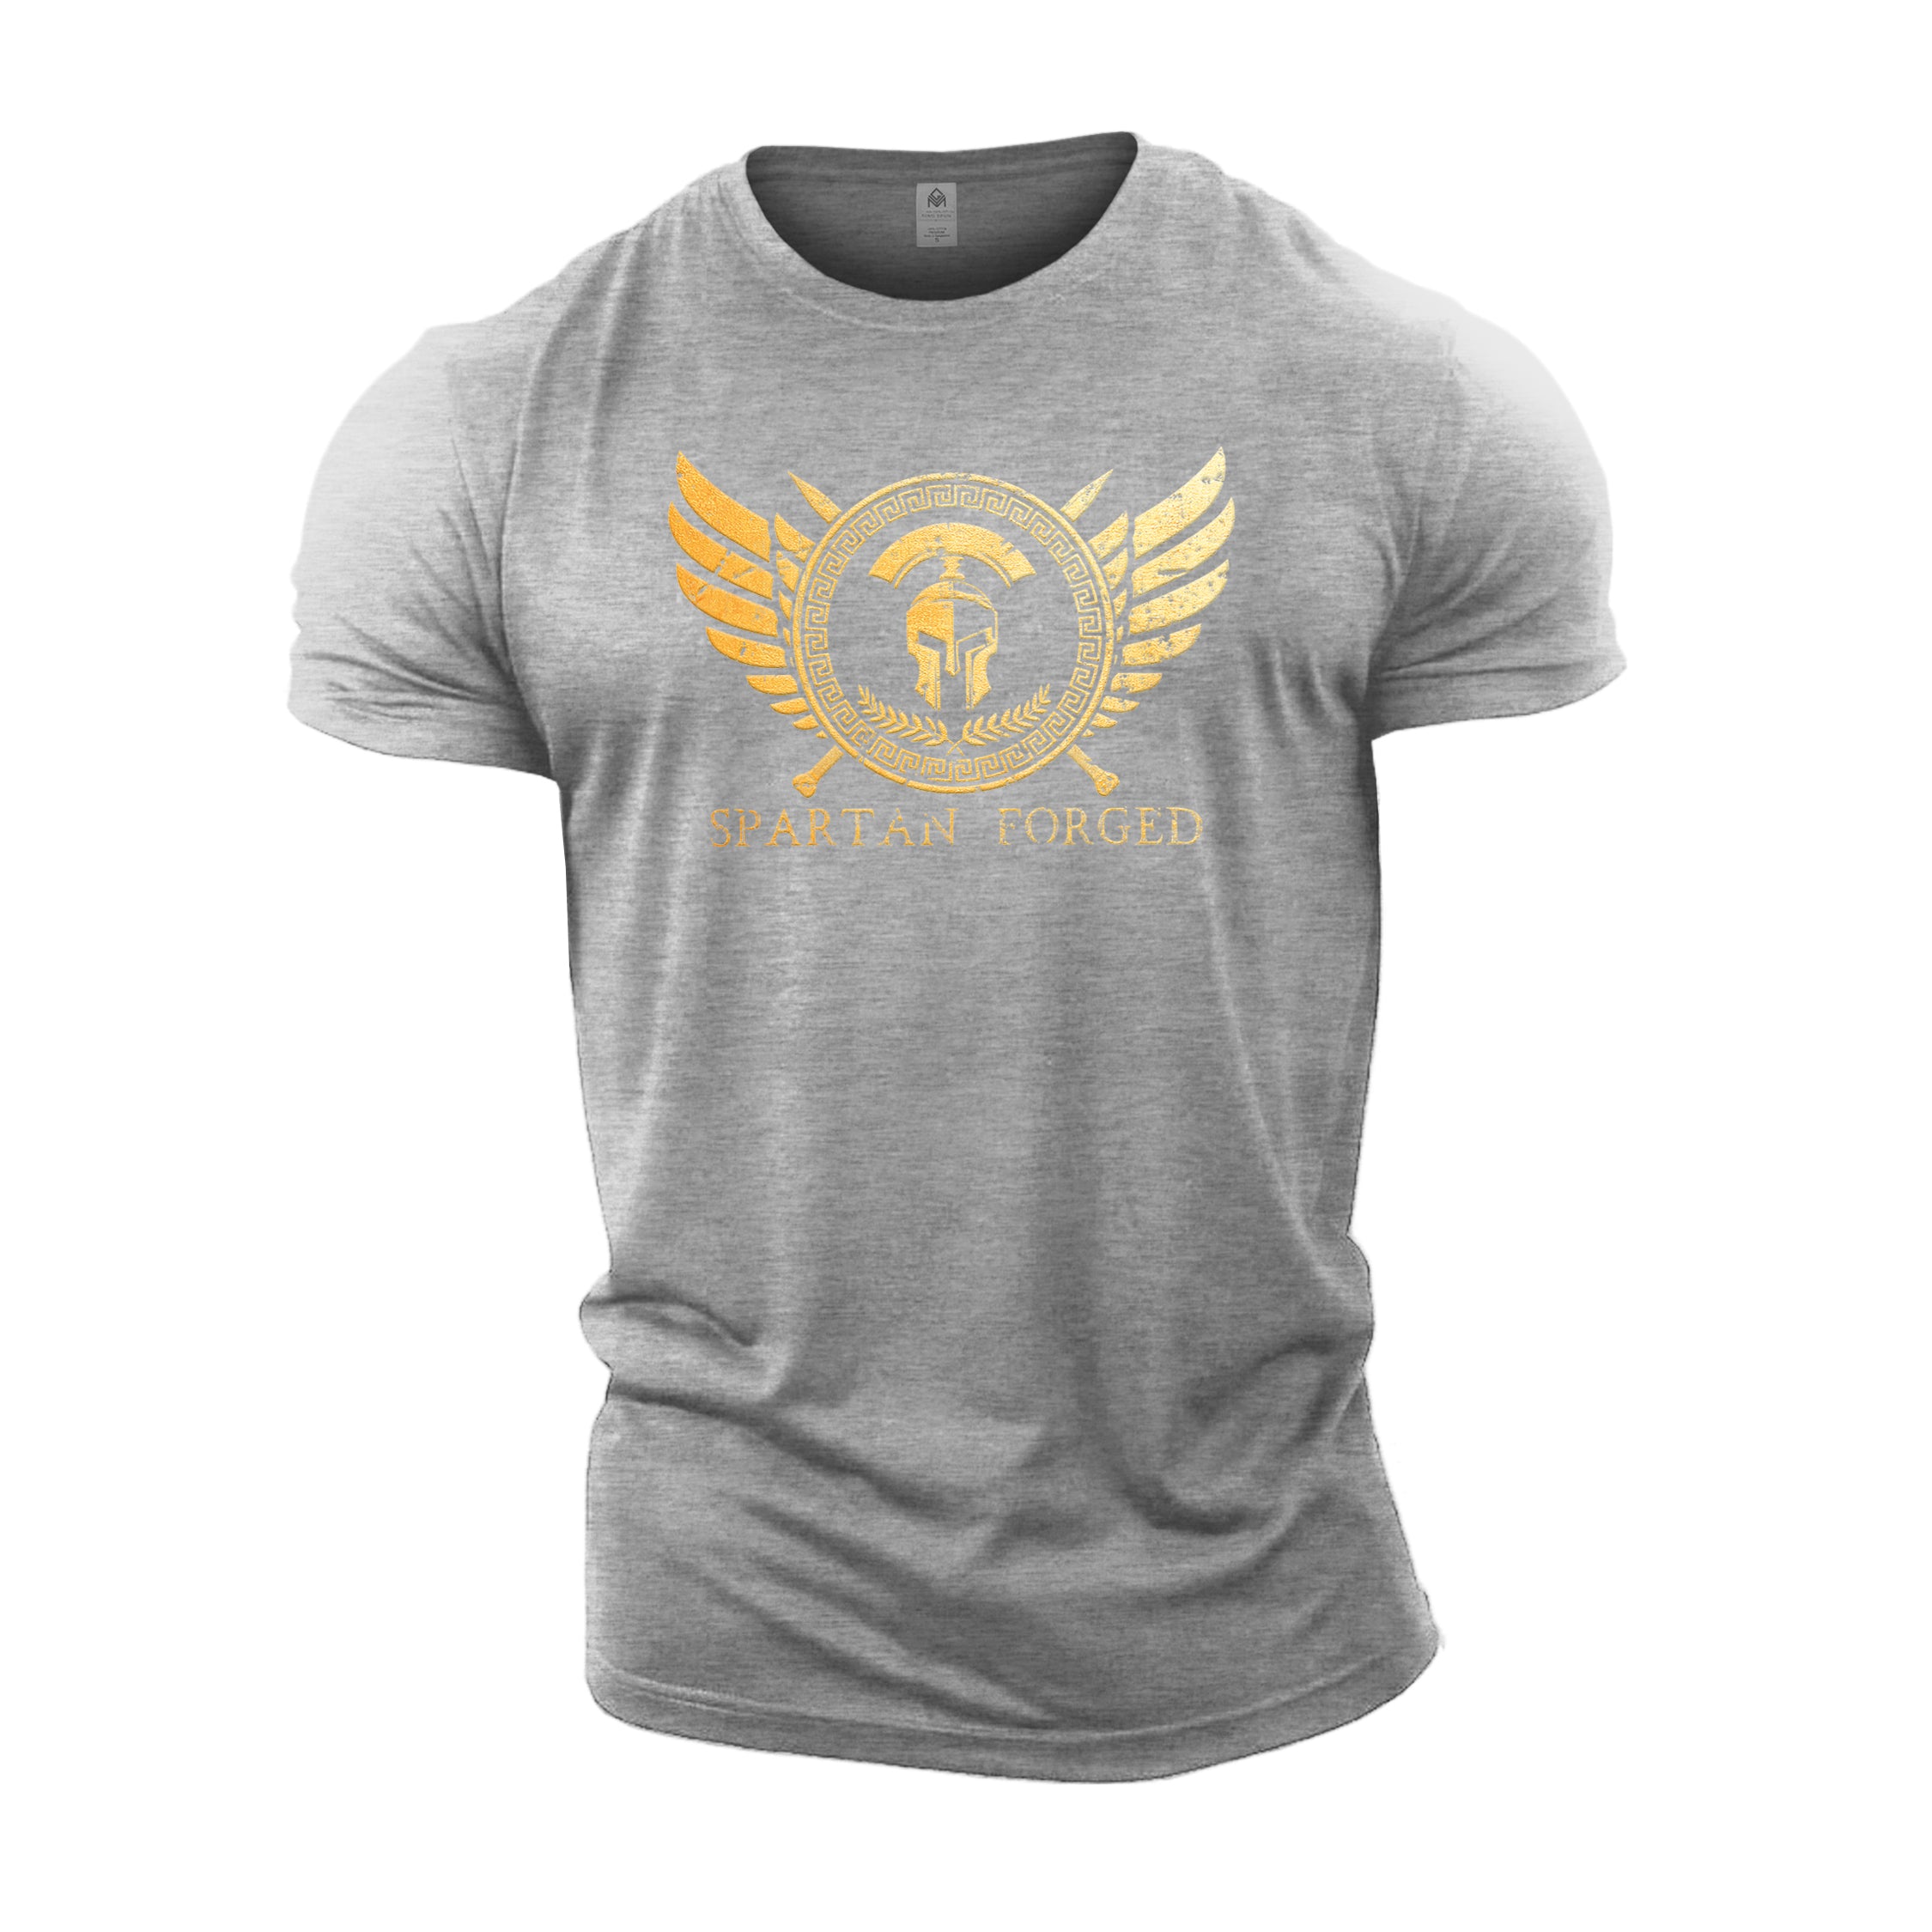 Spartan Forged Chest Emblem Gold - Spartan Forged - Gym T-Shirt